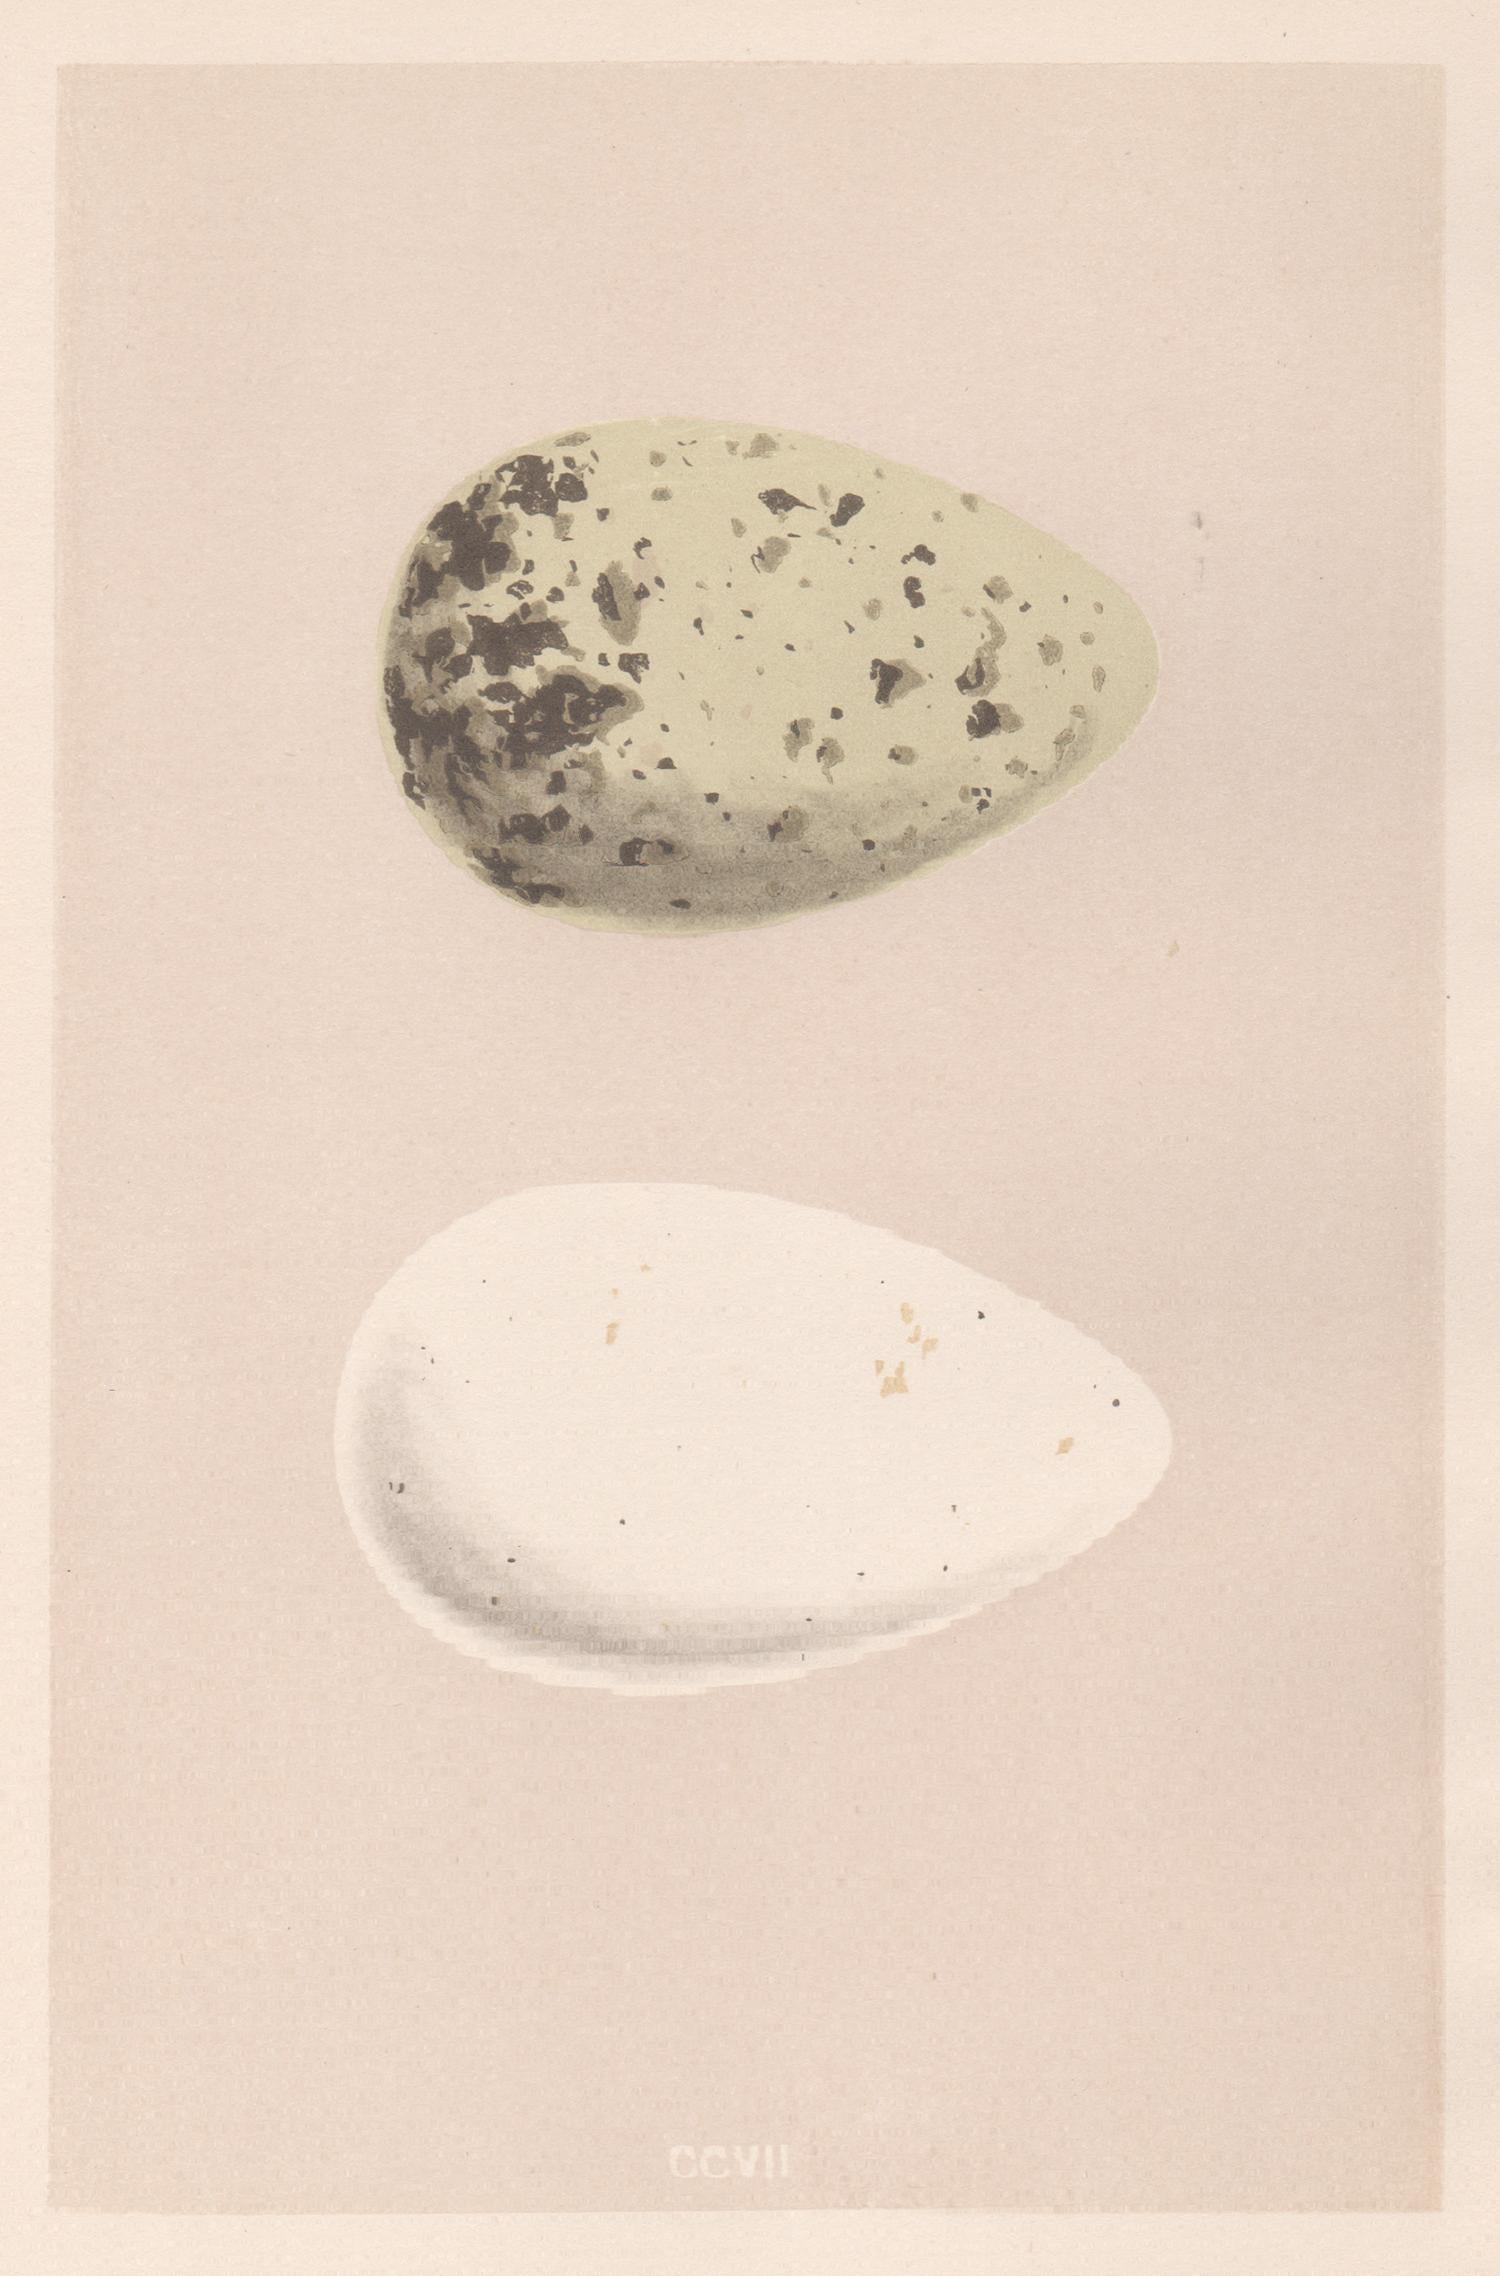 Alexander Lydon Animal Print - Bird Eggs - Antique egg colour woodblock print, 1875